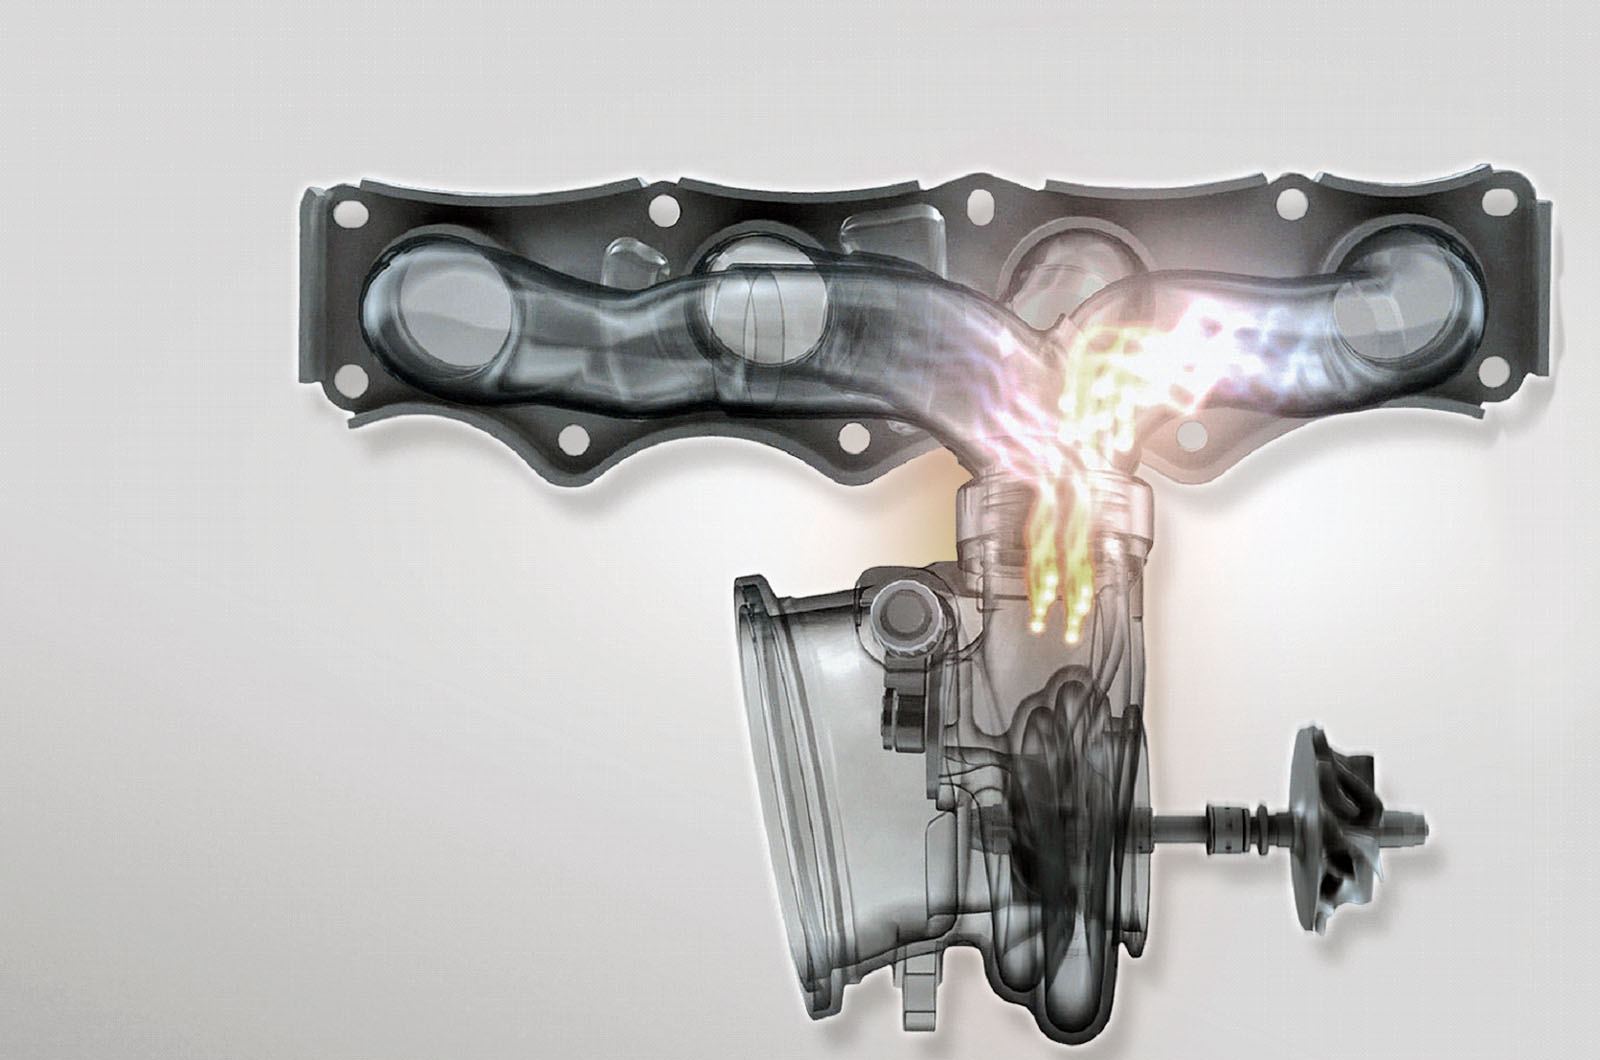 Types of turbochargers: Turbo, Twin turbo, Twin-scroll, do you